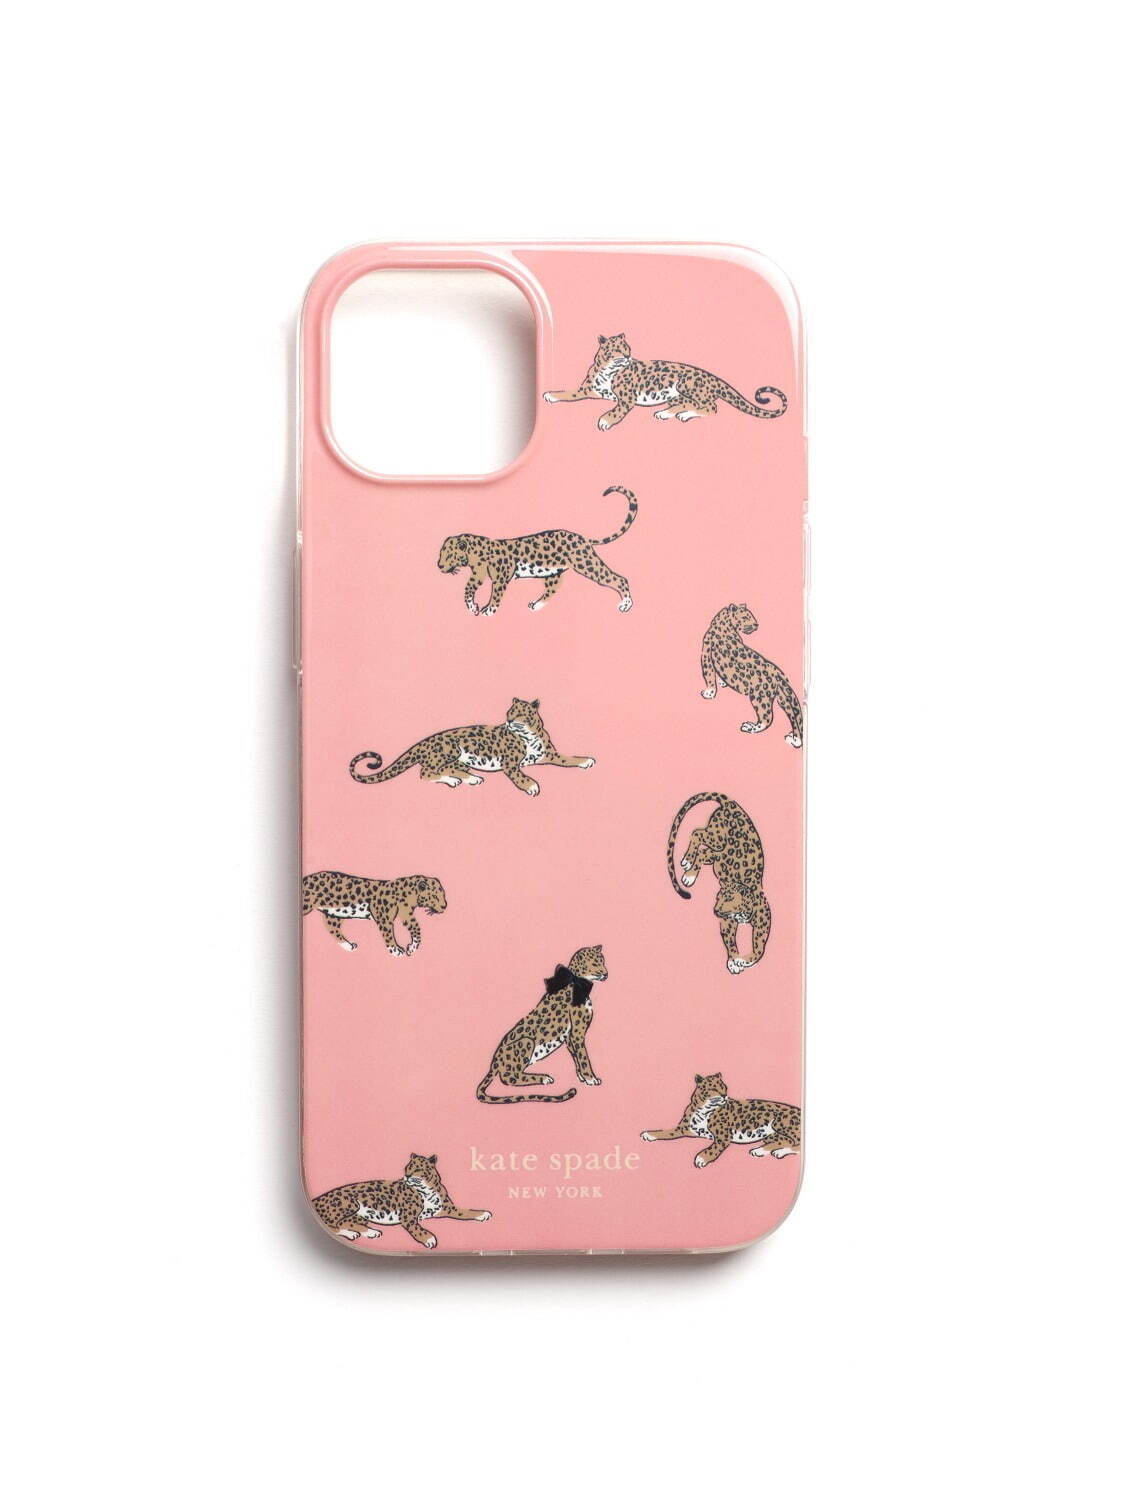 leopard iphone case 13
6,050円
※8月末発売予定